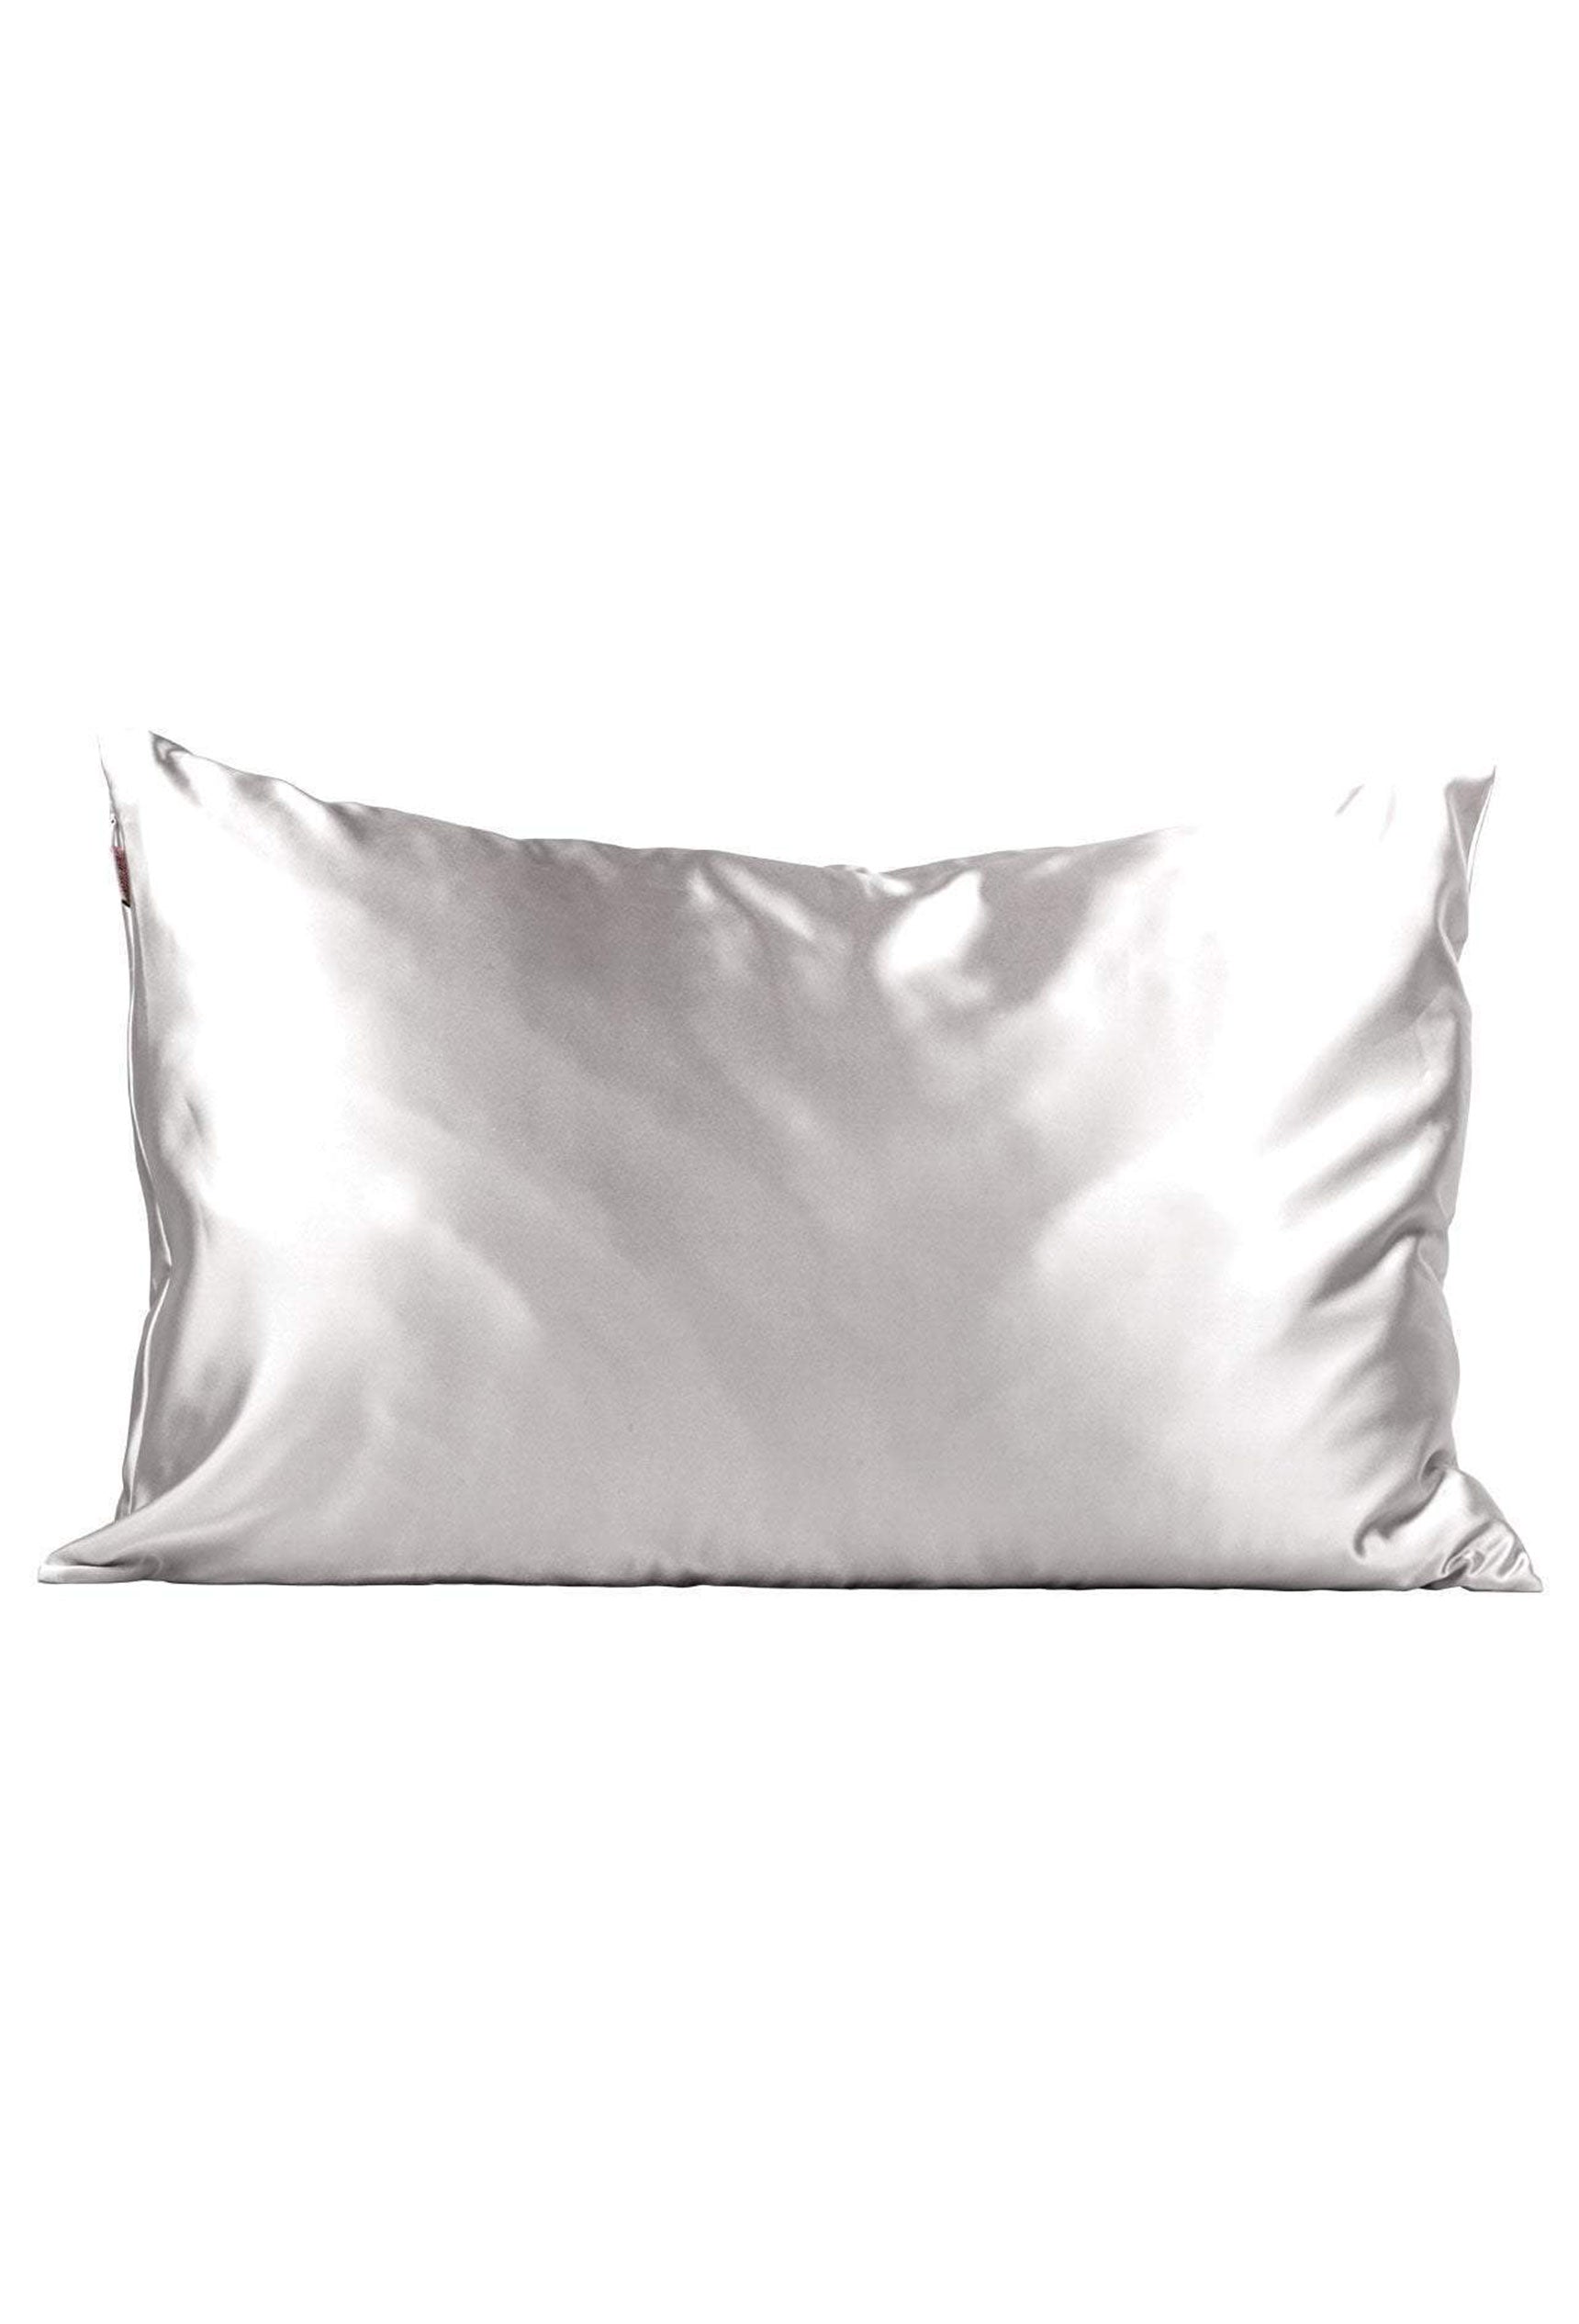 Kitsch Satin Pillowcase in Silver, silver satin pillowcase standard size 